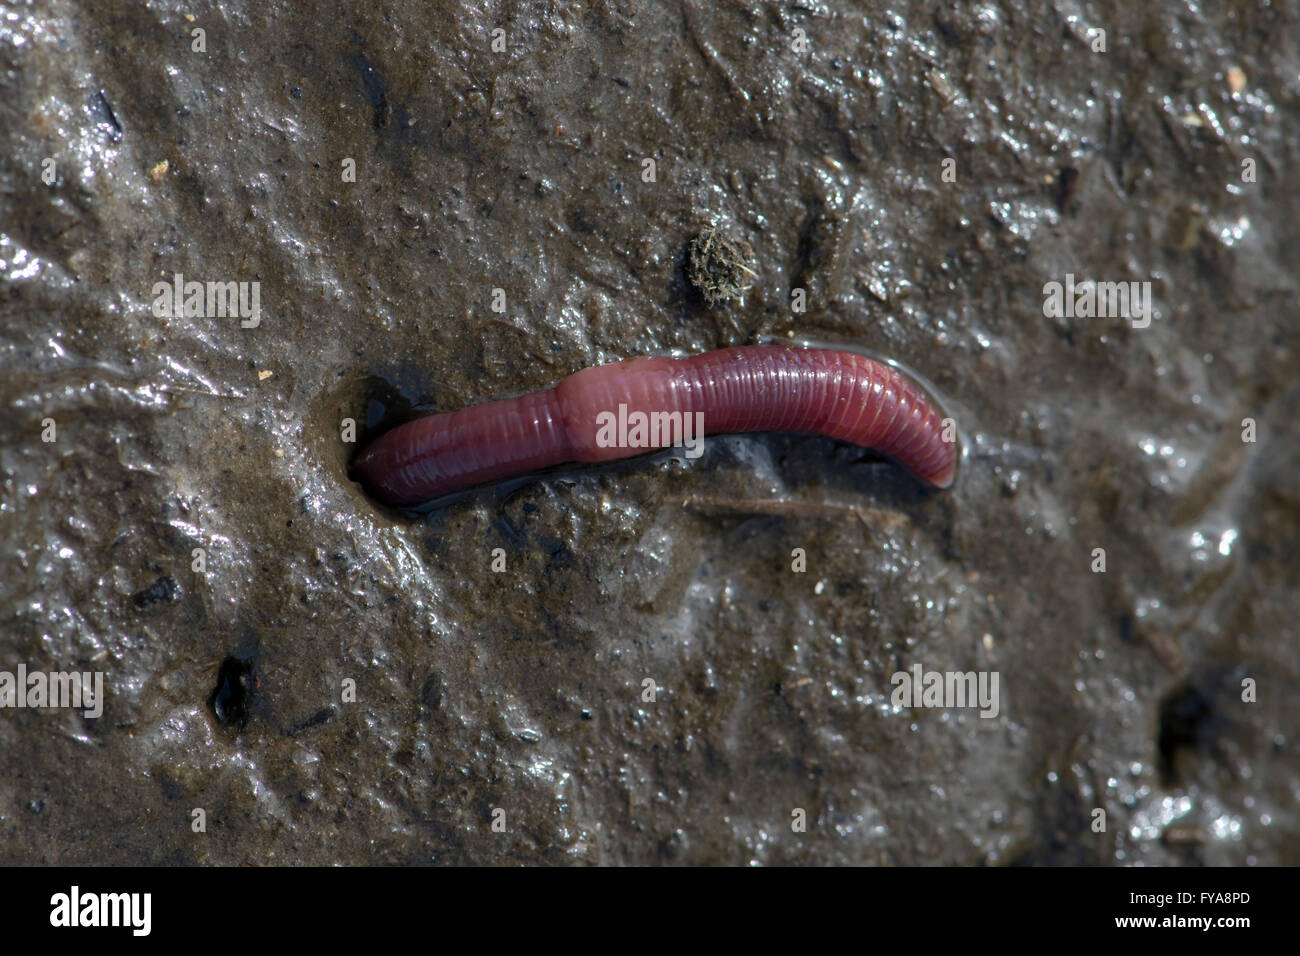 Brandling worm, Eisenia fetida,retreating into soil 'burrow' on surface of rotting organic material Stock Photo